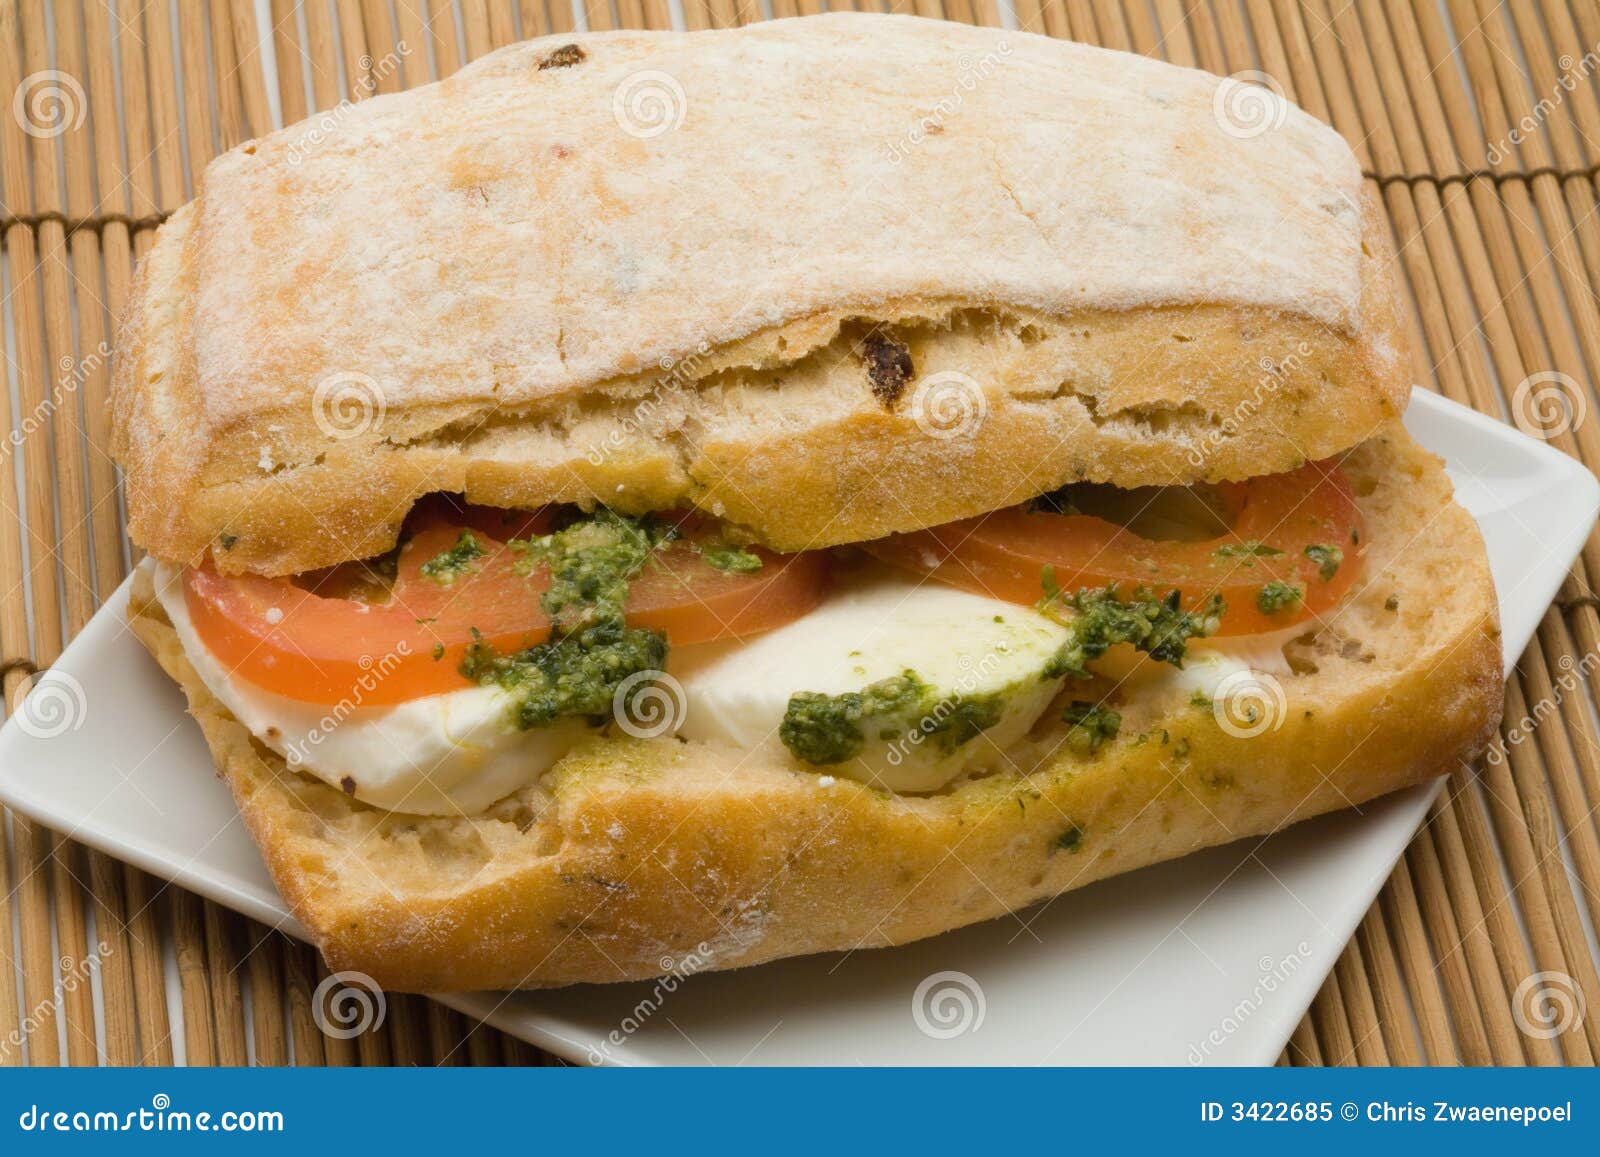 Gourmet sandwich stock image. Image of bread, healthy - 3422685